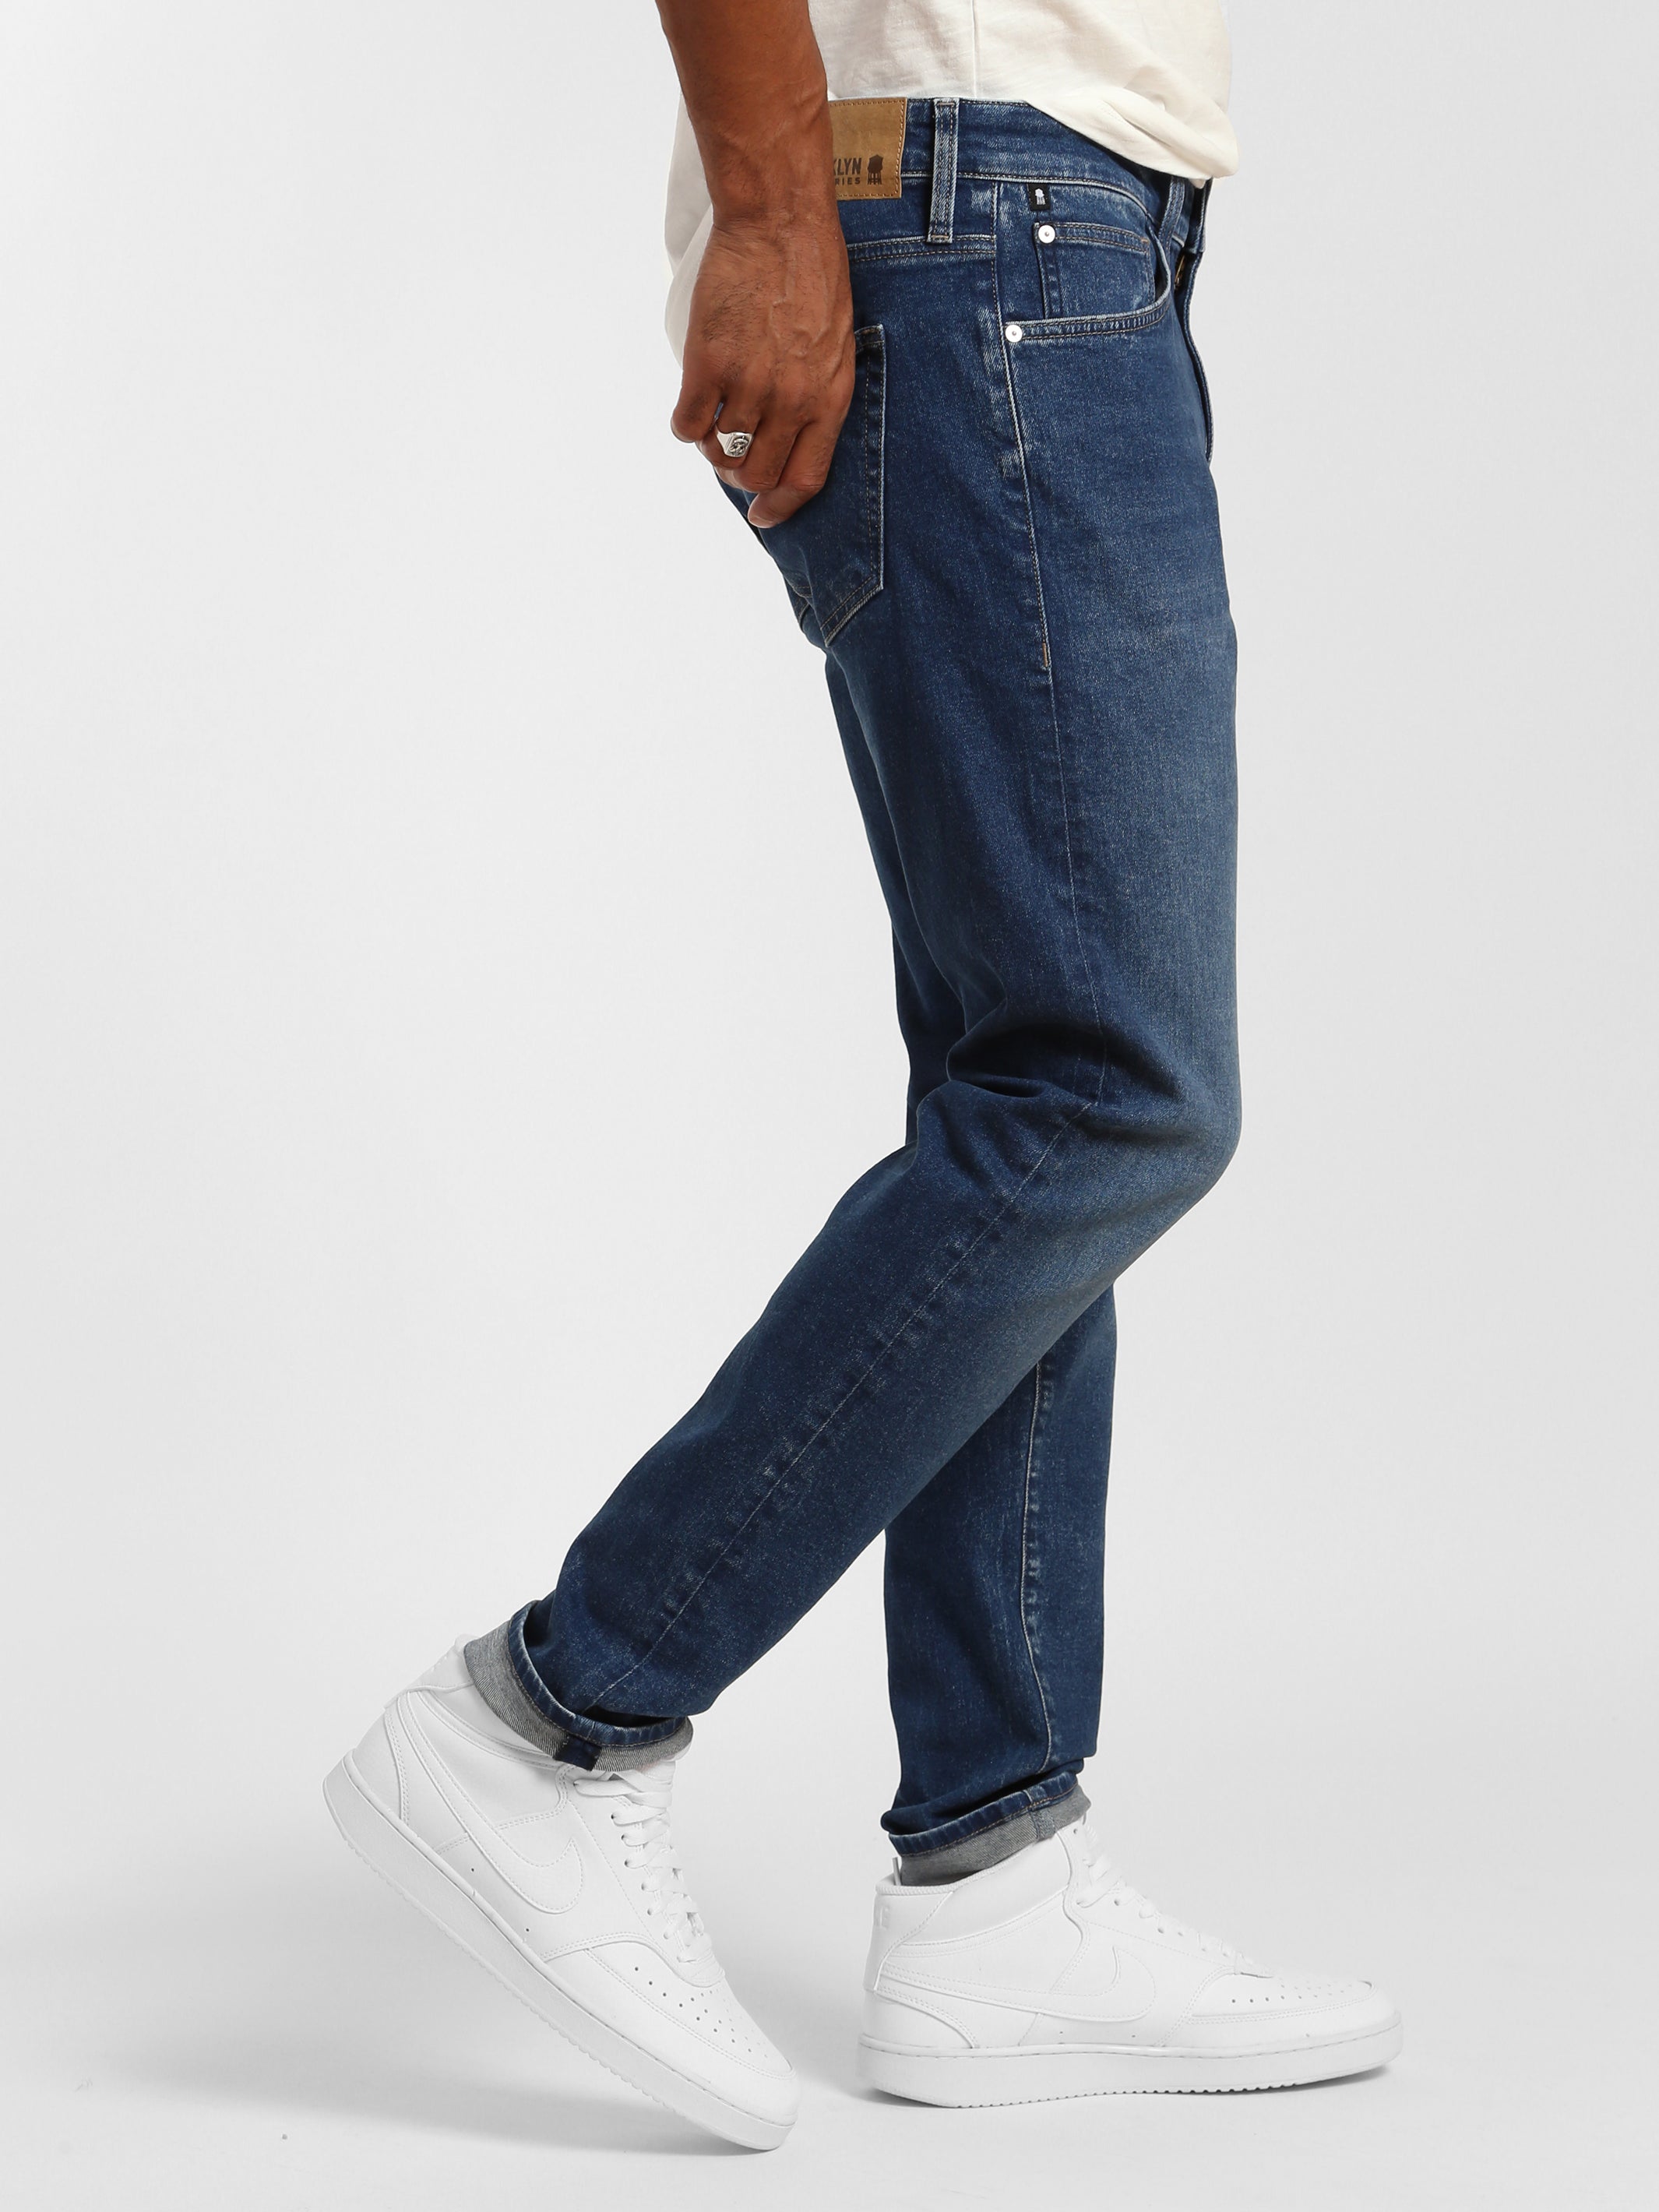 Franklin Athletic Fit Jeans in Dark Distressed Denim